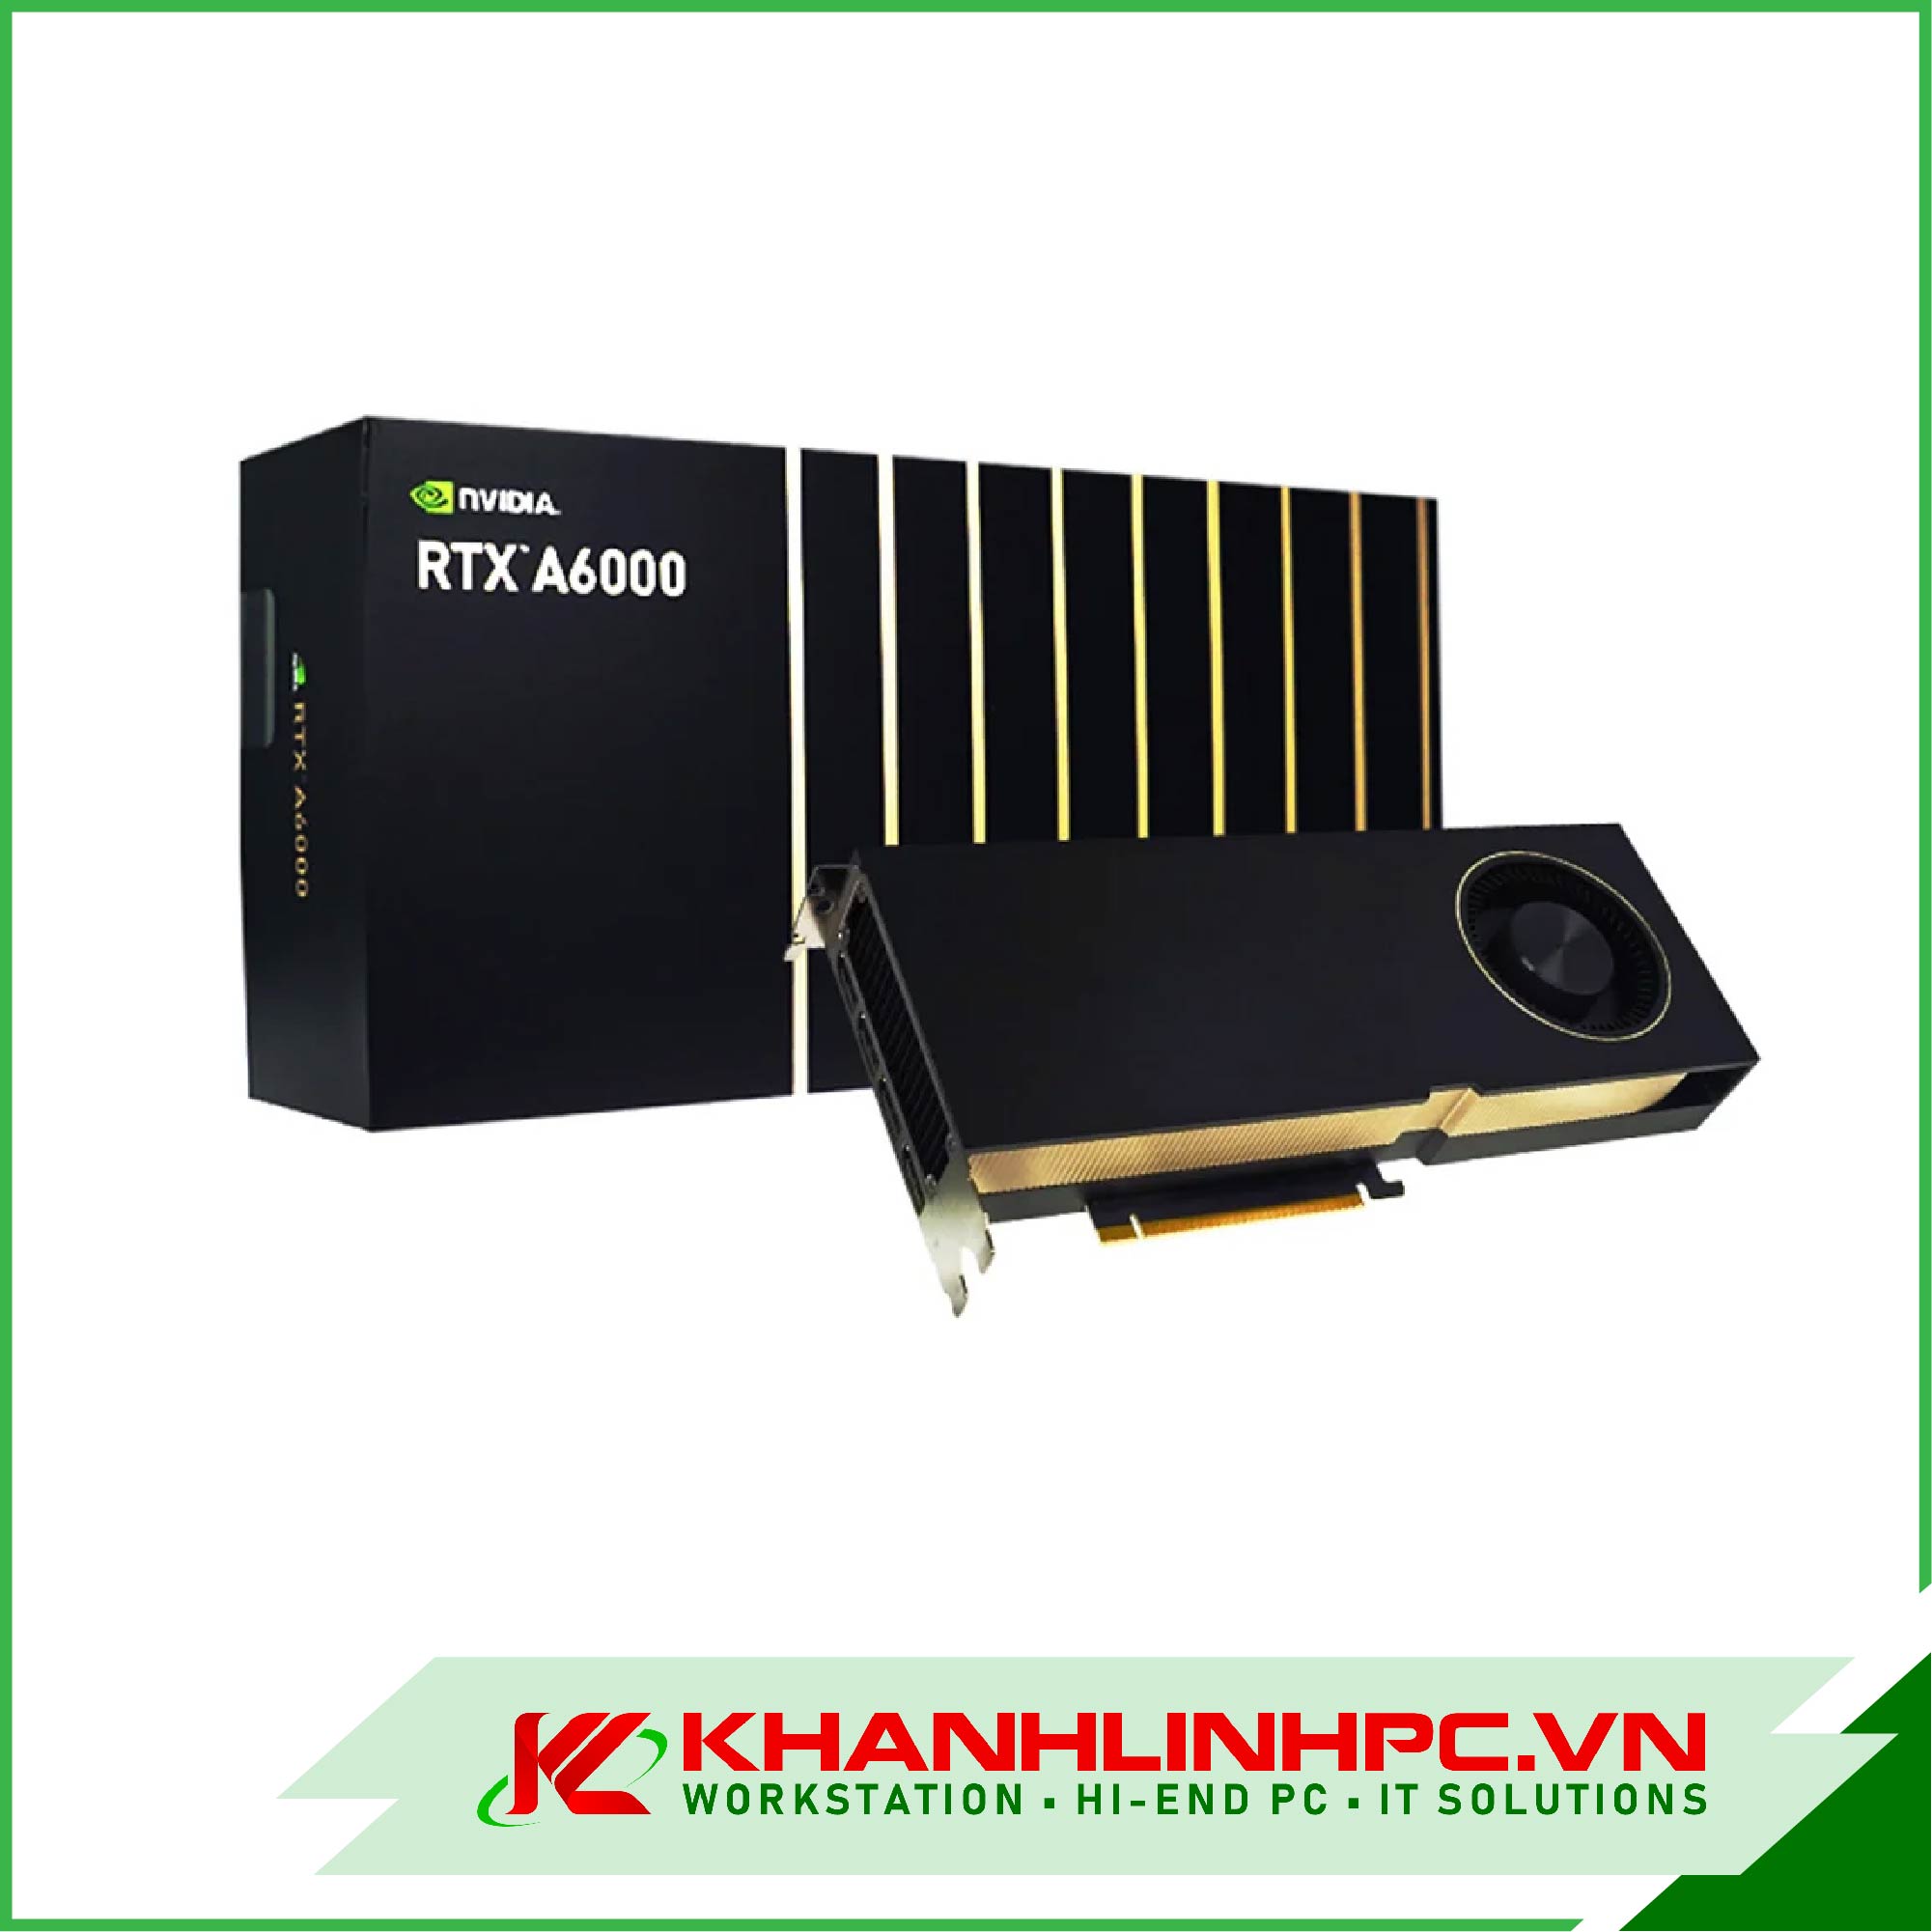 VGA CARD NVIDIA Quadro RTX A6000 48GB GDDR6